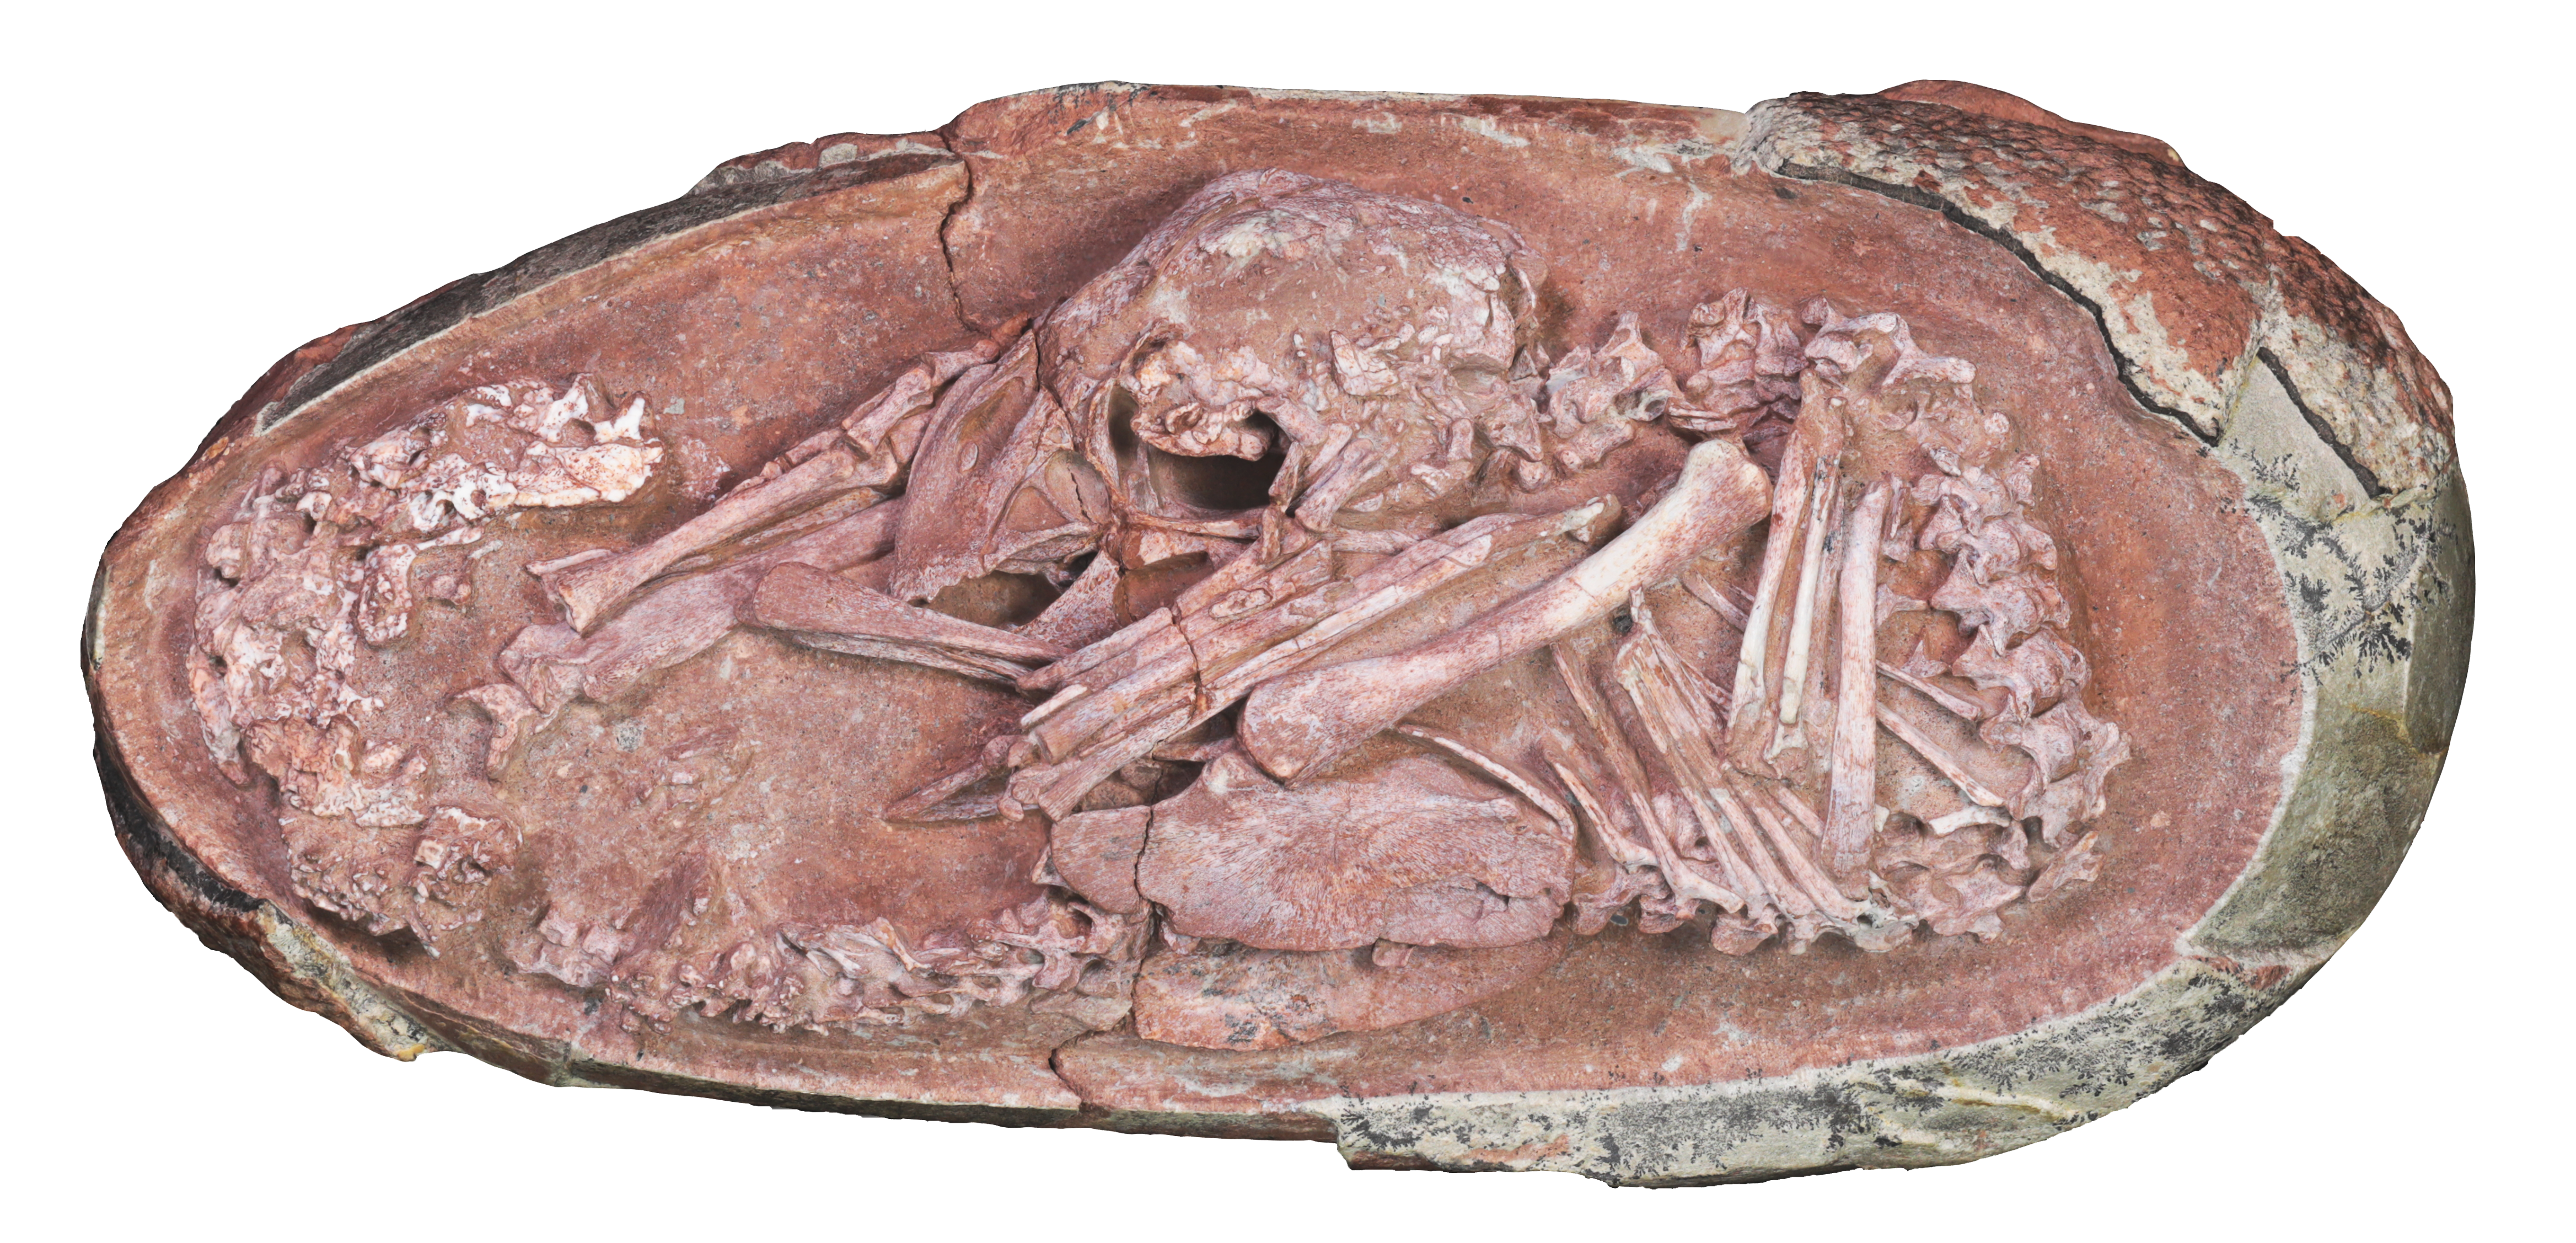 The oviraptorosaur specimen is one of the best-preserved dinosaur embryos ever reported